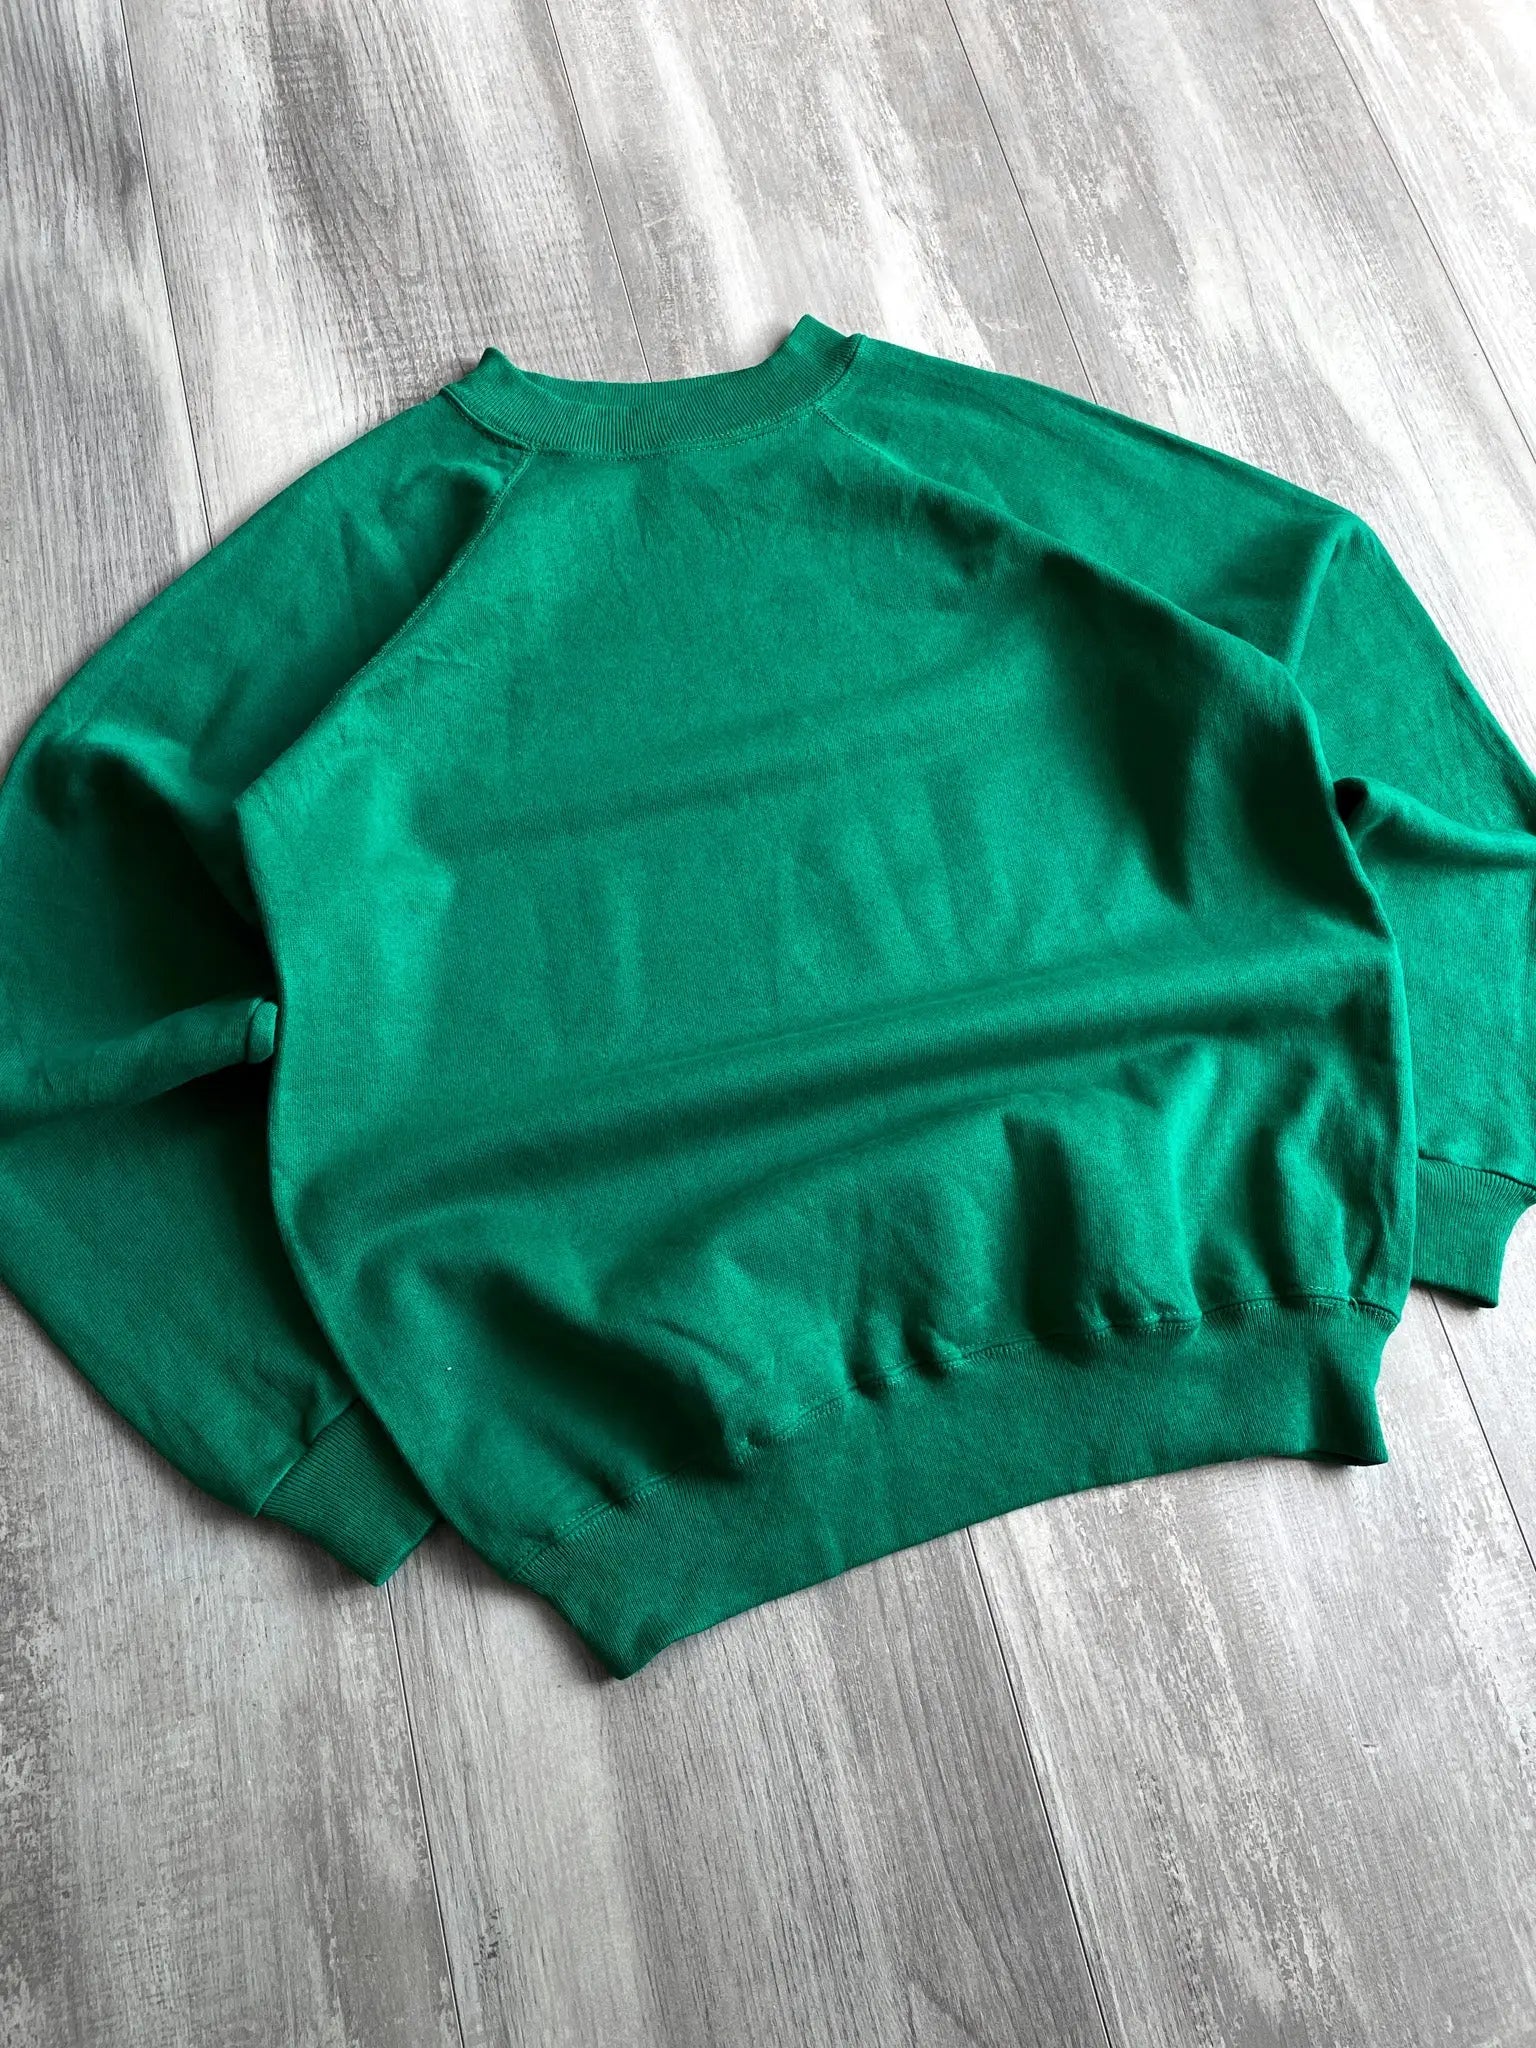 Hanes Her Way Green Sweatshirt - L sullivansvintage